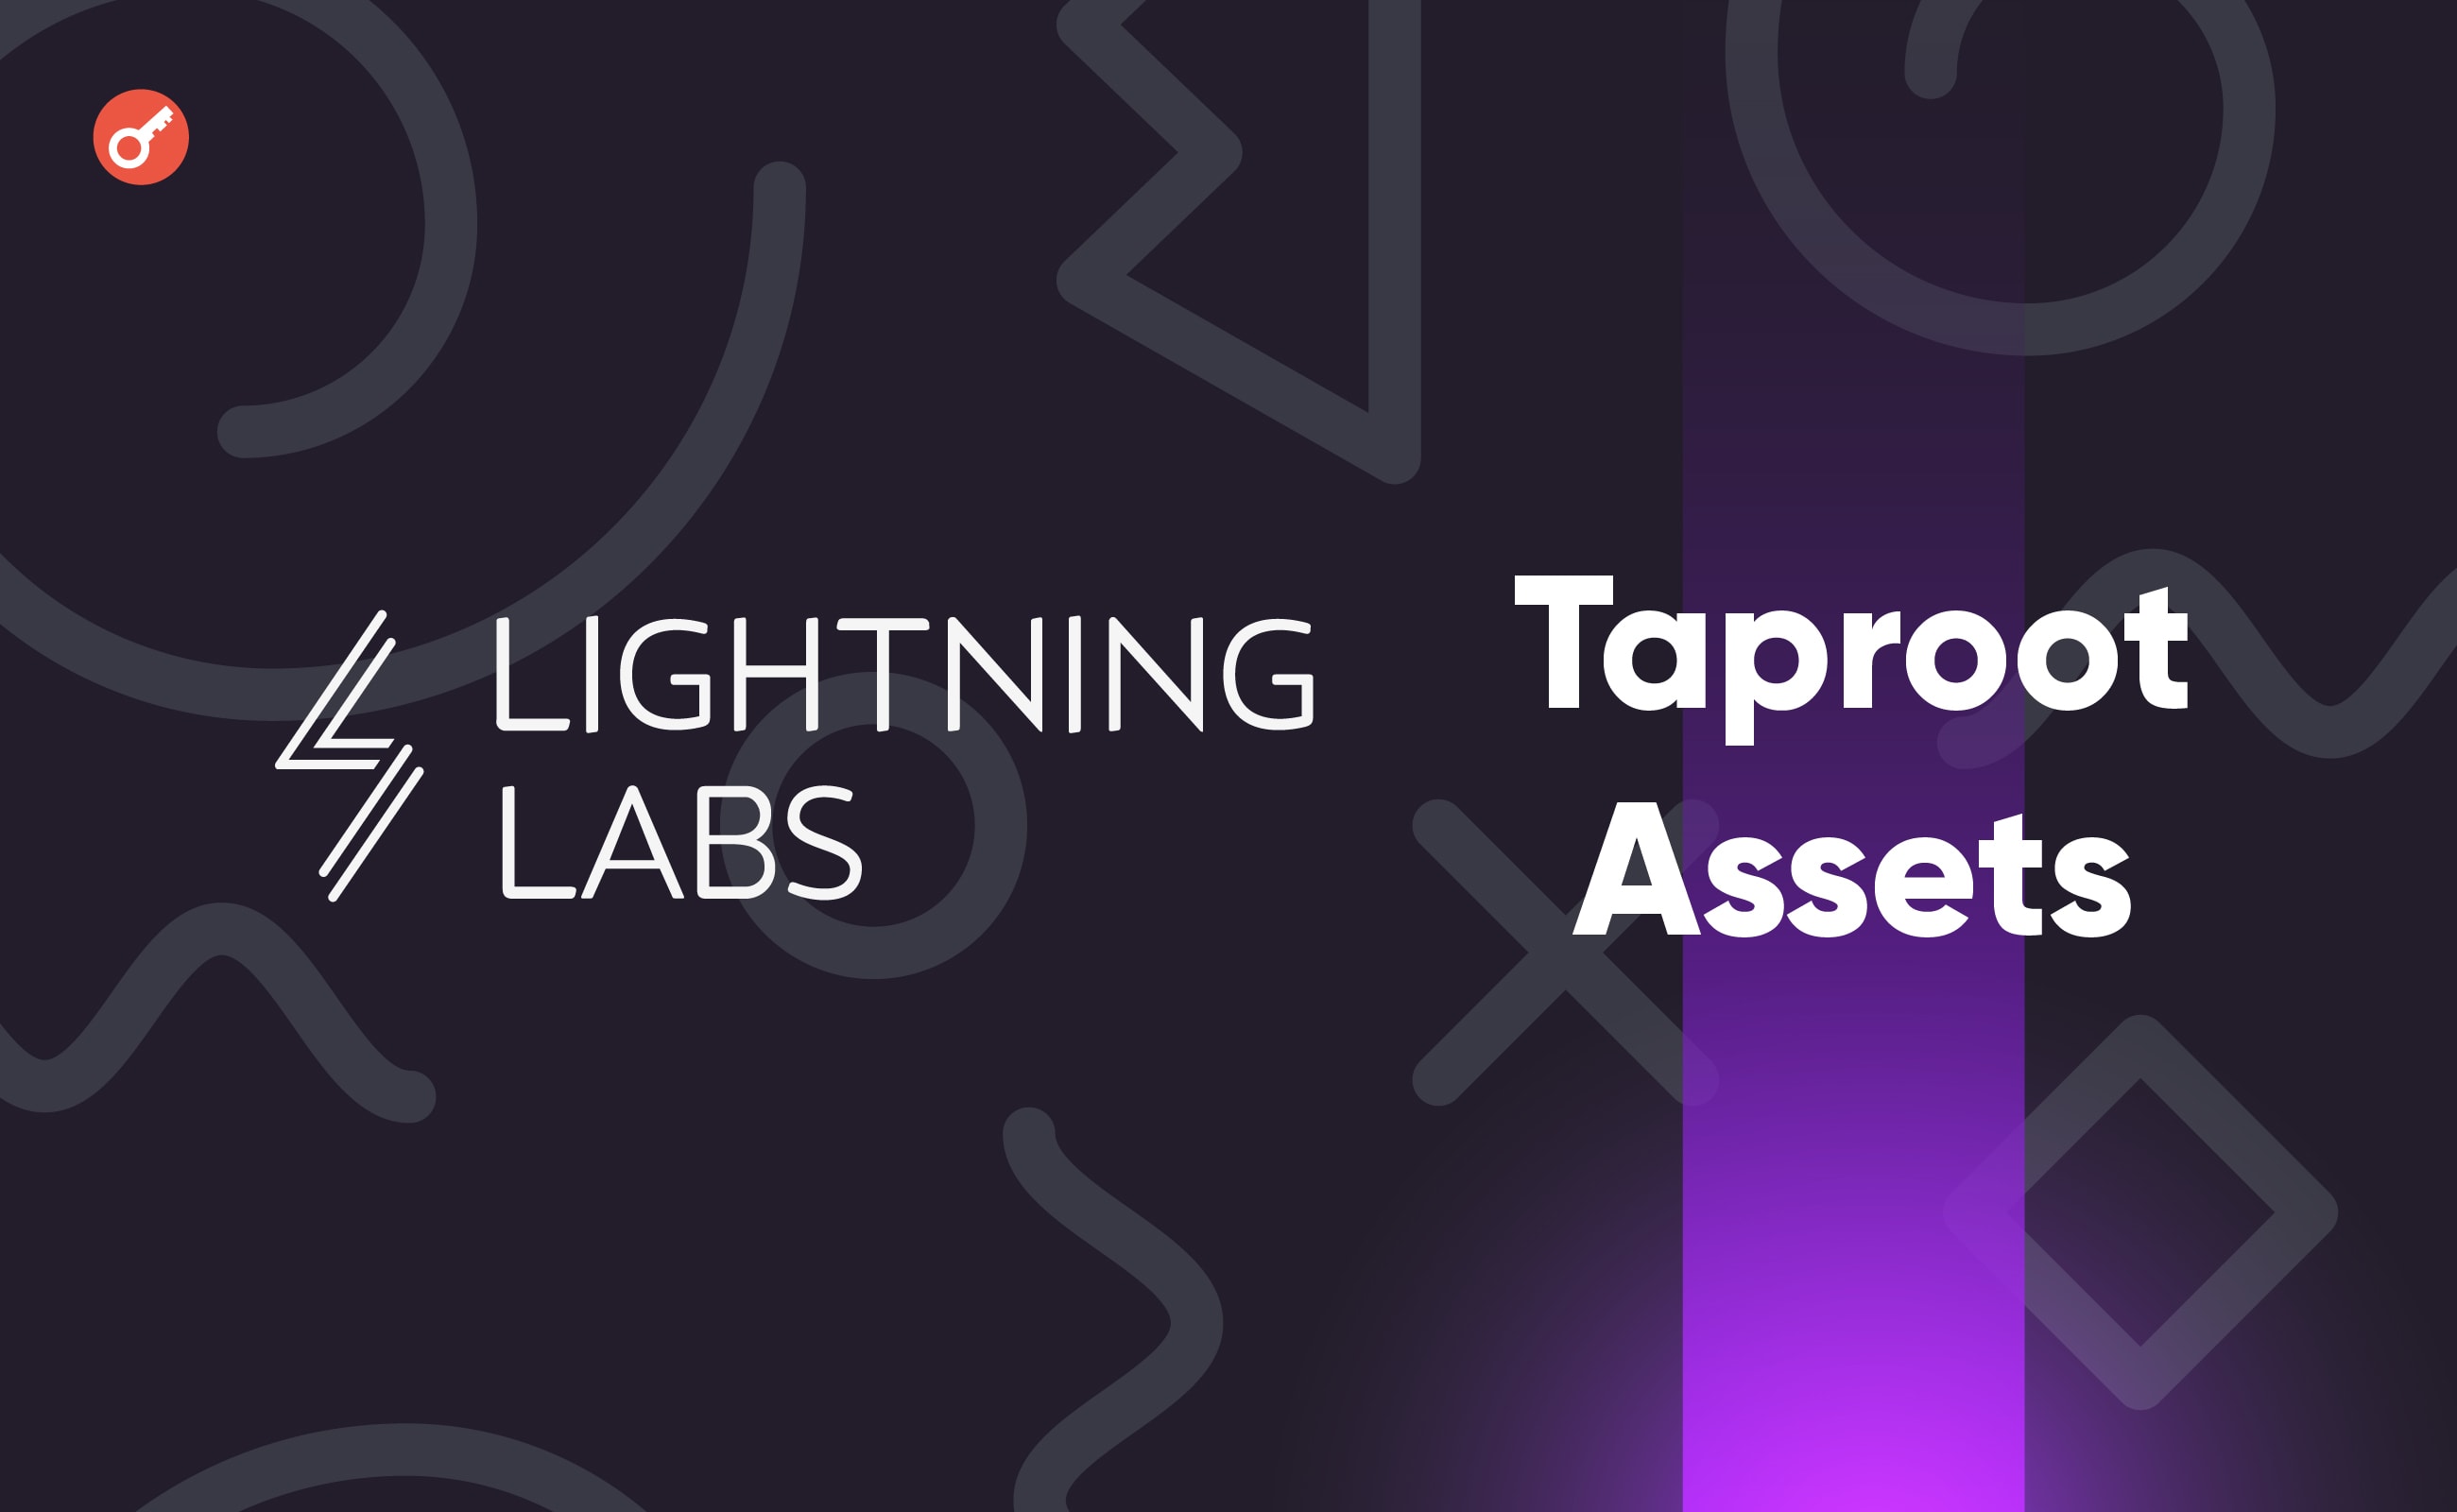 Lightning Labs запустила альфа-версію протоколу Taproot Assets. Головний колаж новини.